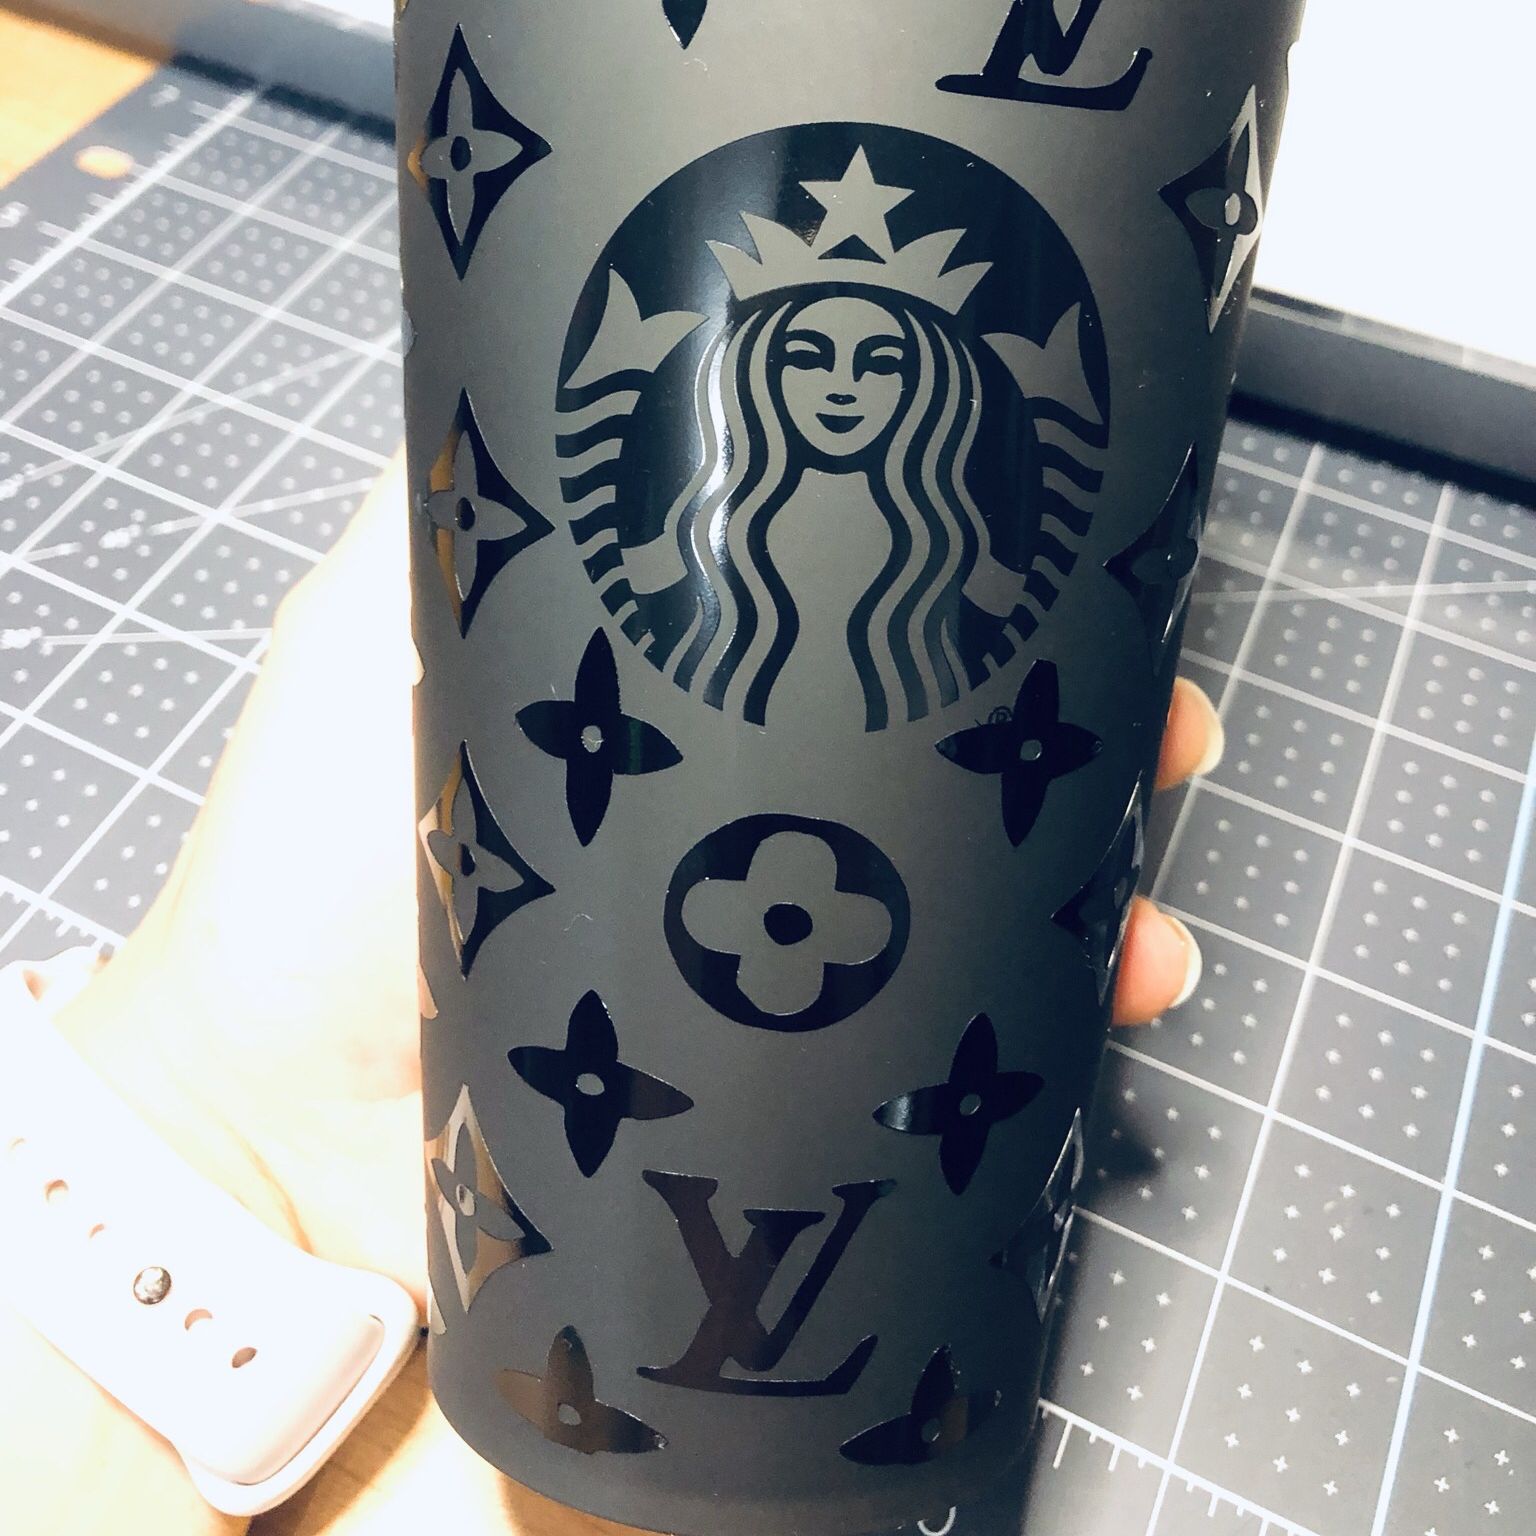 Non Personalized Louis Vuitton Starbucks Cup